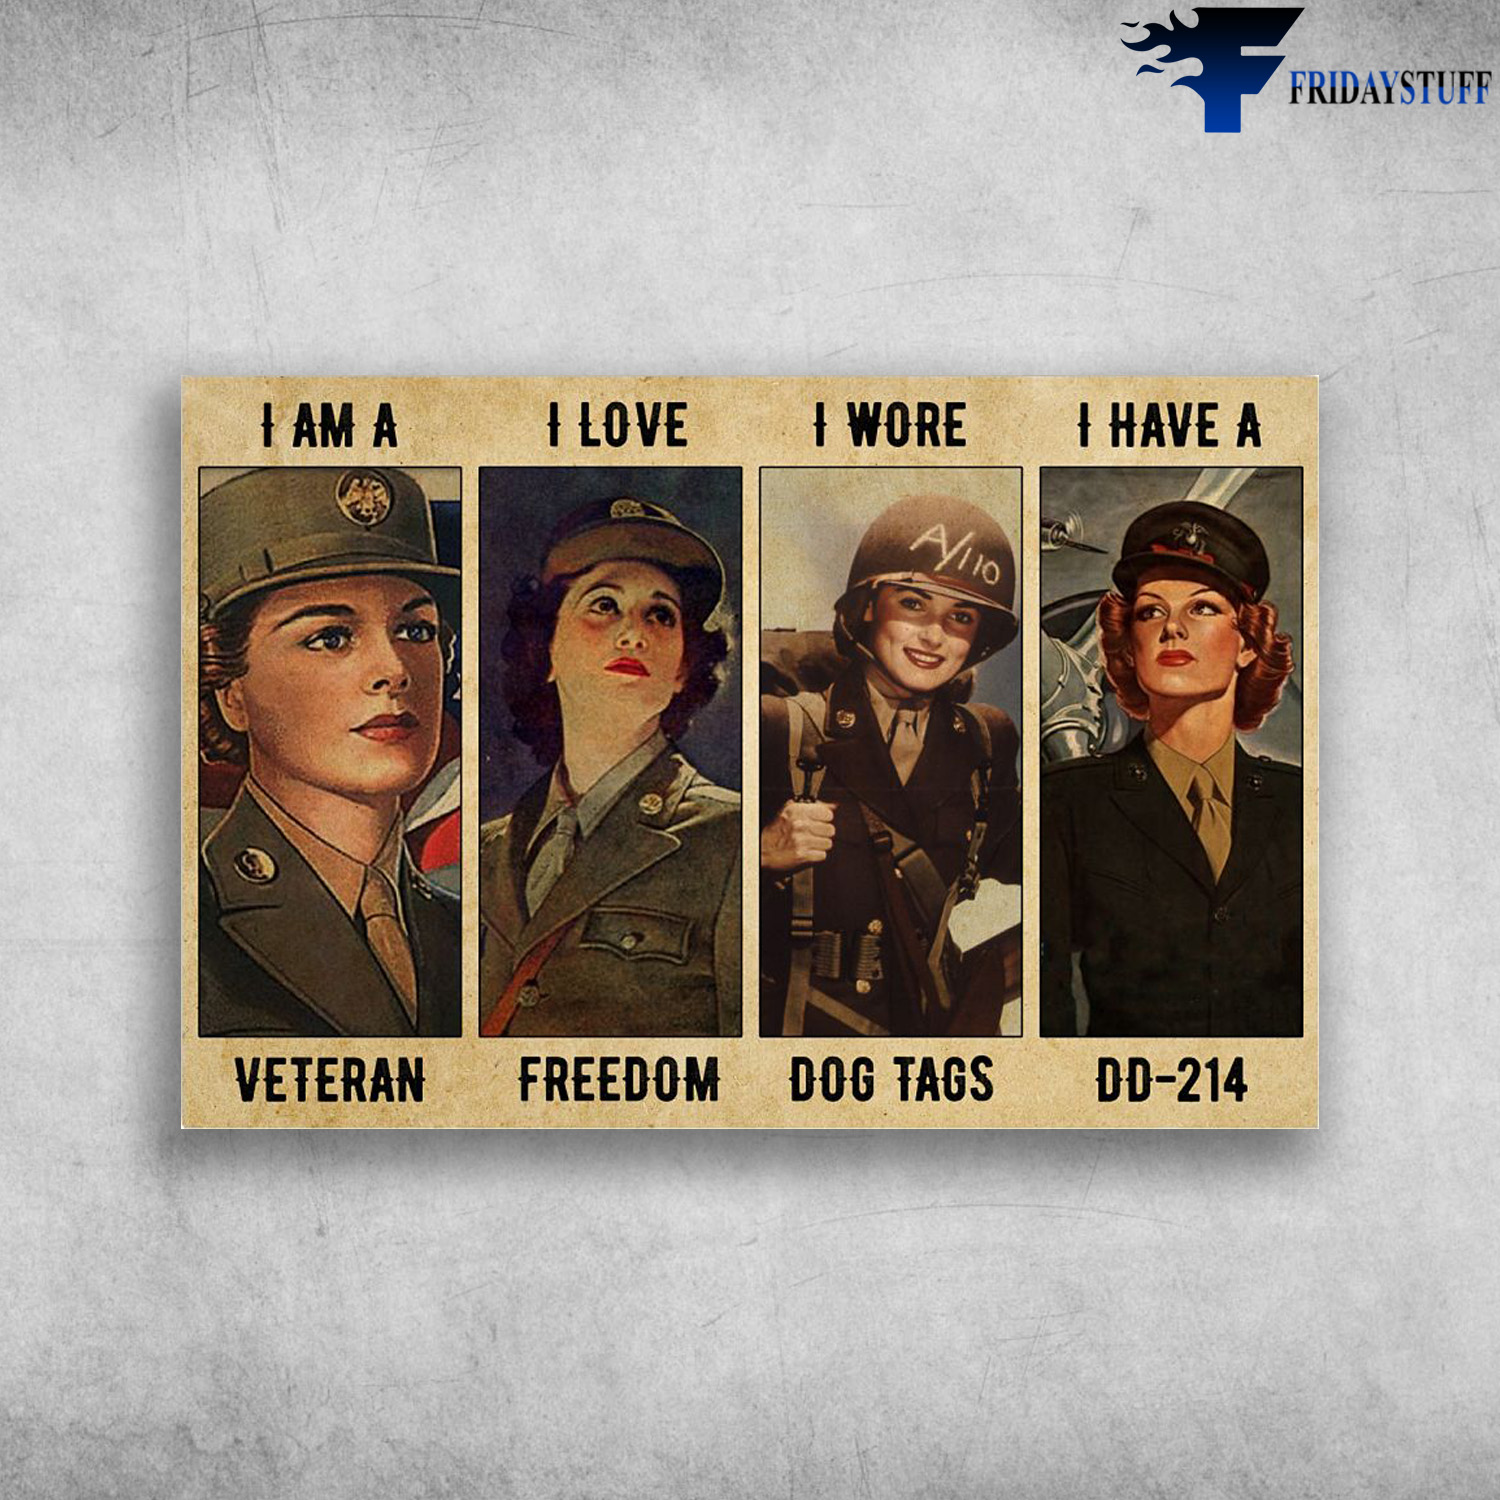 Proud Female Veteran - I Am A Veteran, I Love Freedom, I Wore Dog Tags, I Have A DD-214